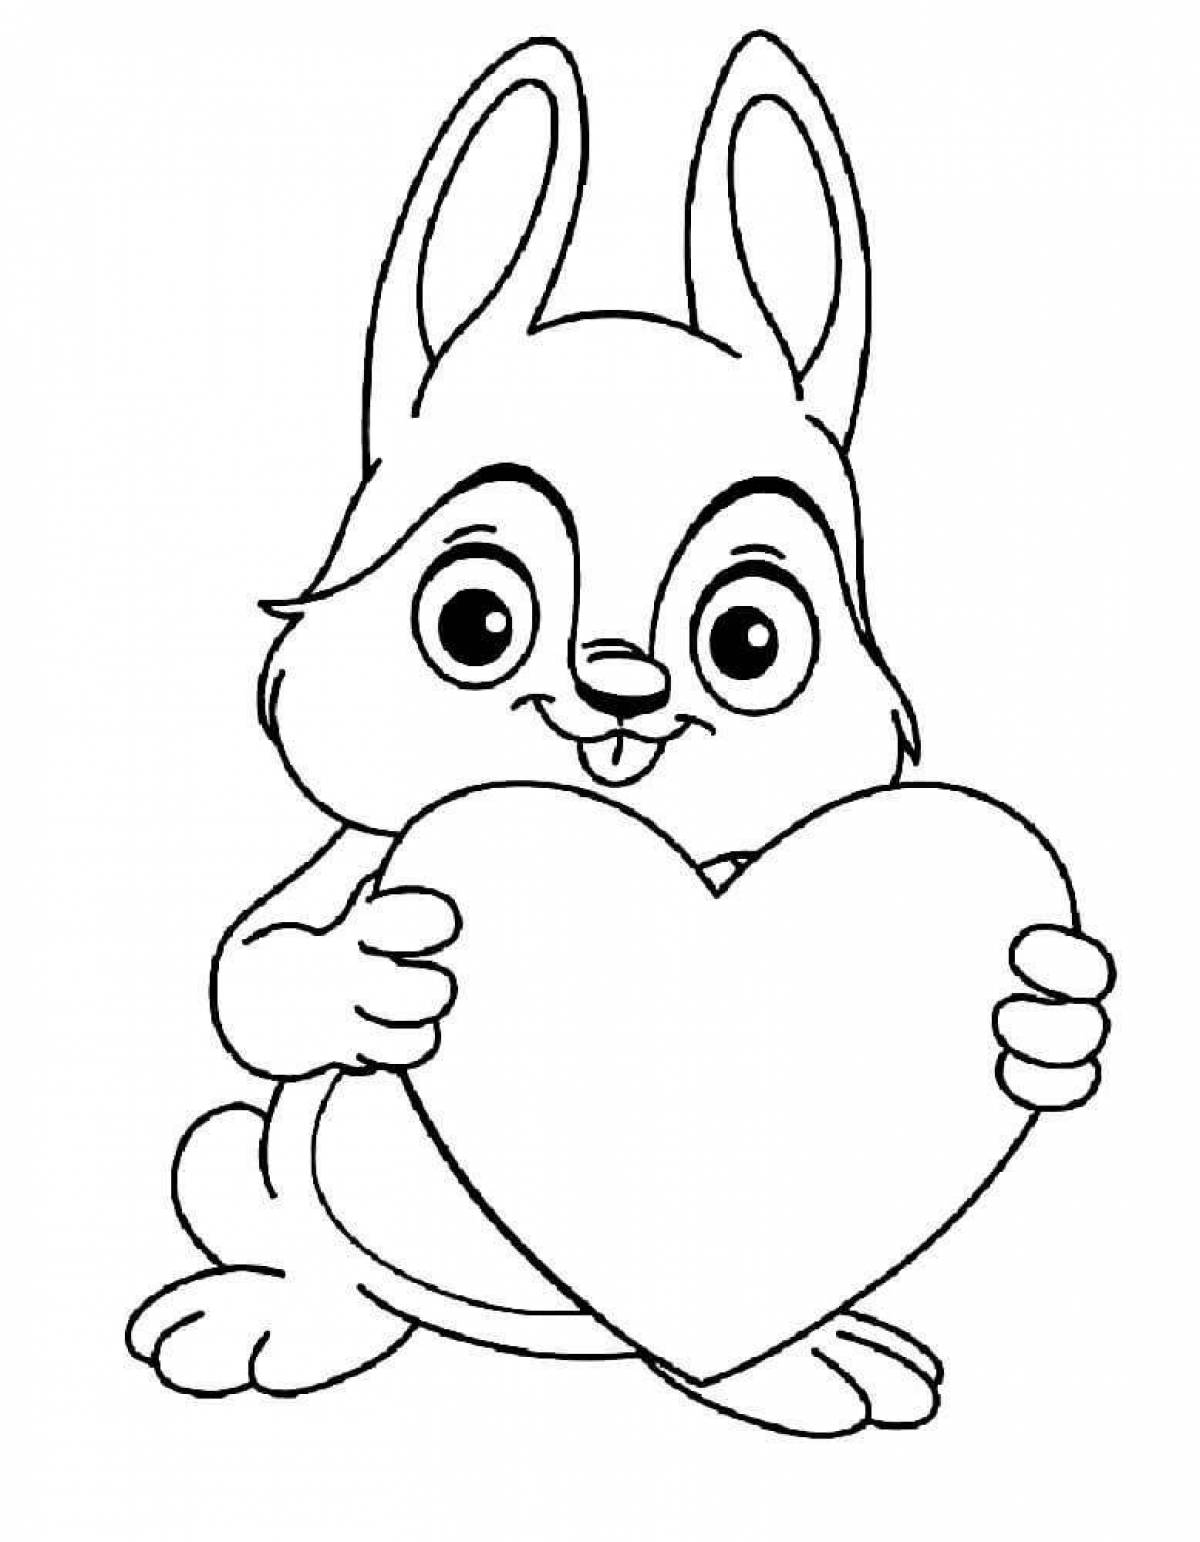 Fun coloring bunny drawing